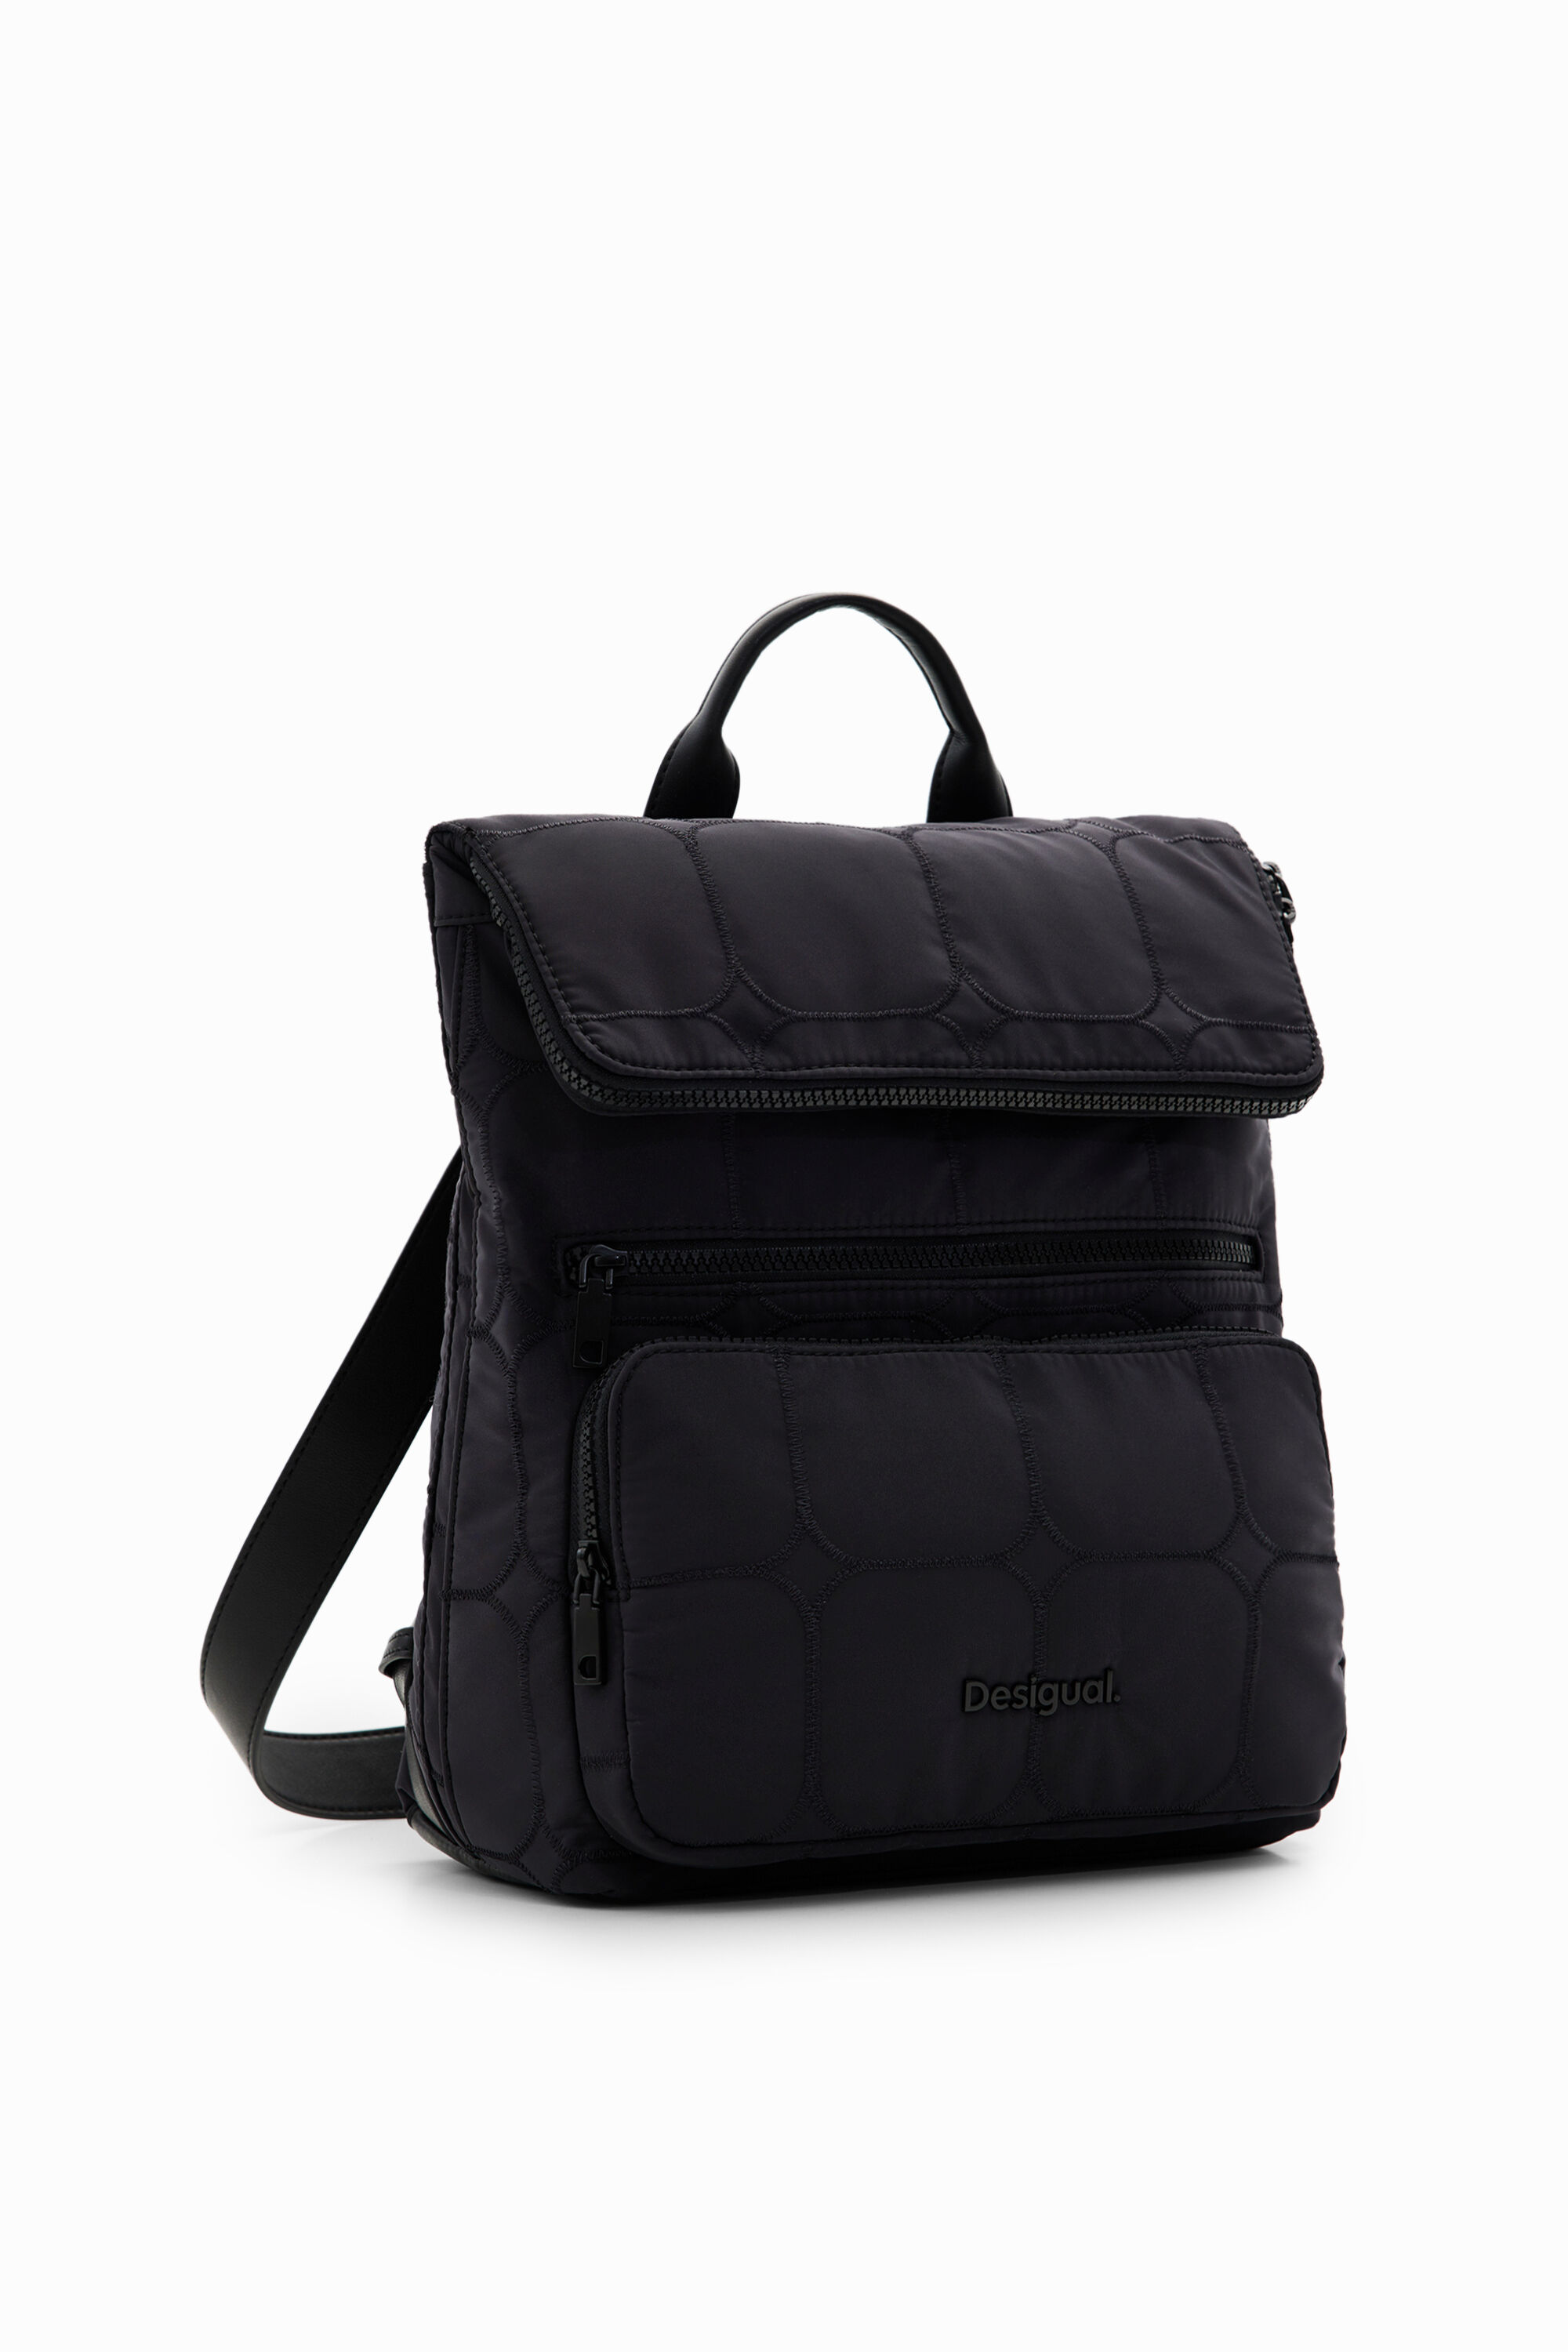 Desigual Midsize padded backpack